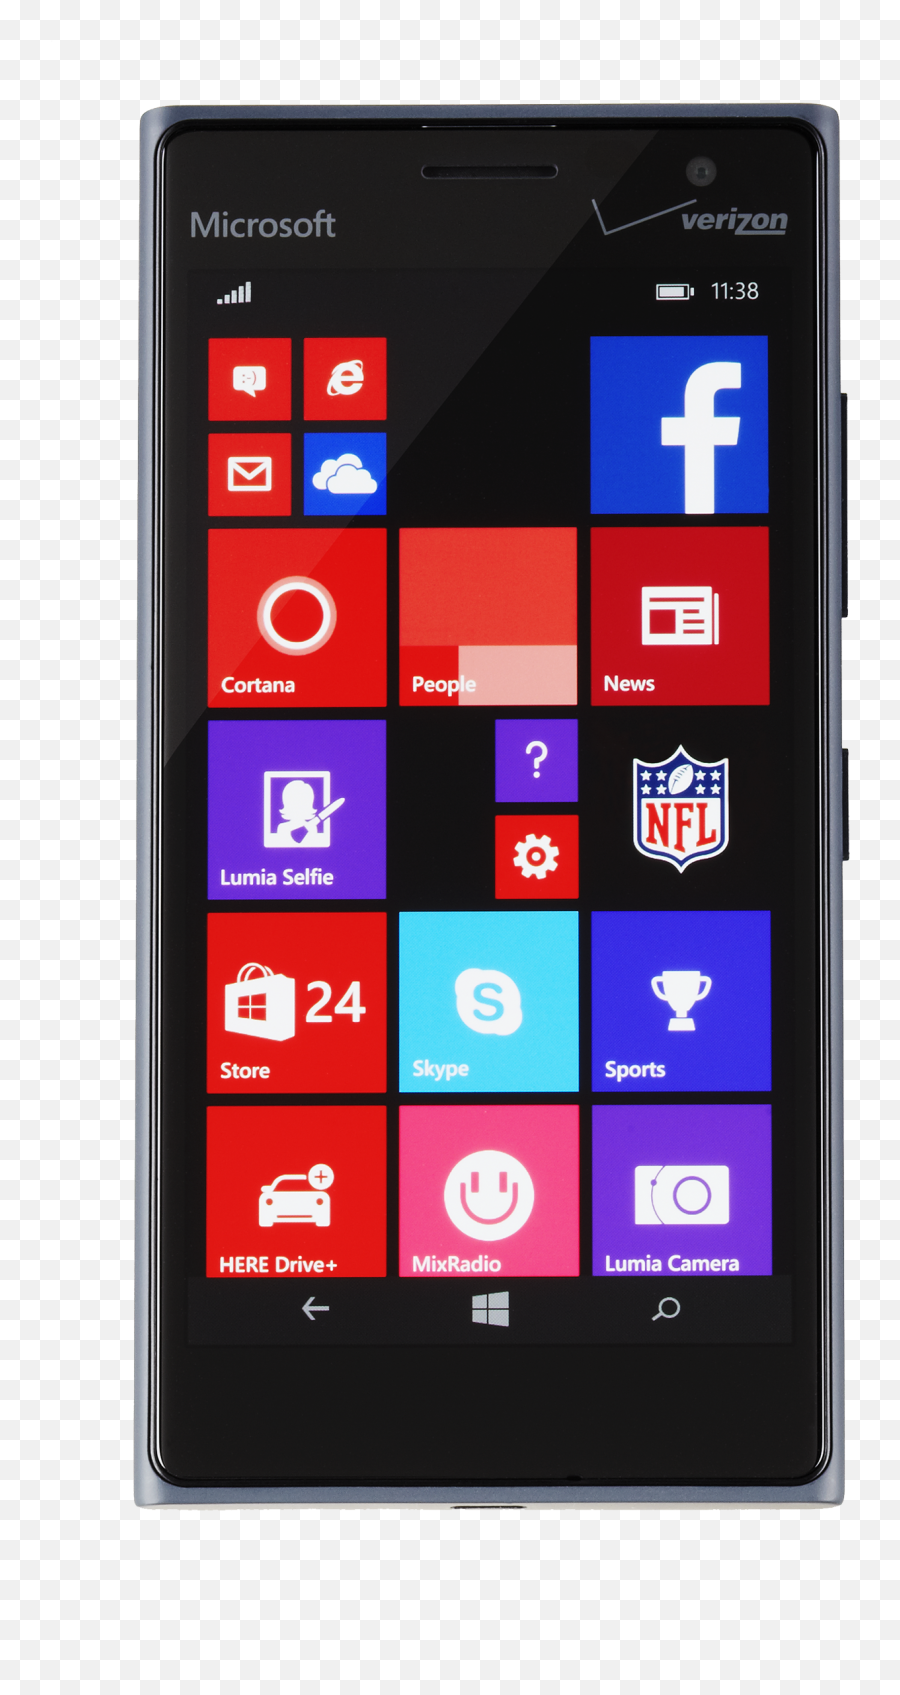 Microsoft Lumia 735 Smartphone - Technology Applications Png,Verizon Nokia Lumia Icon Black